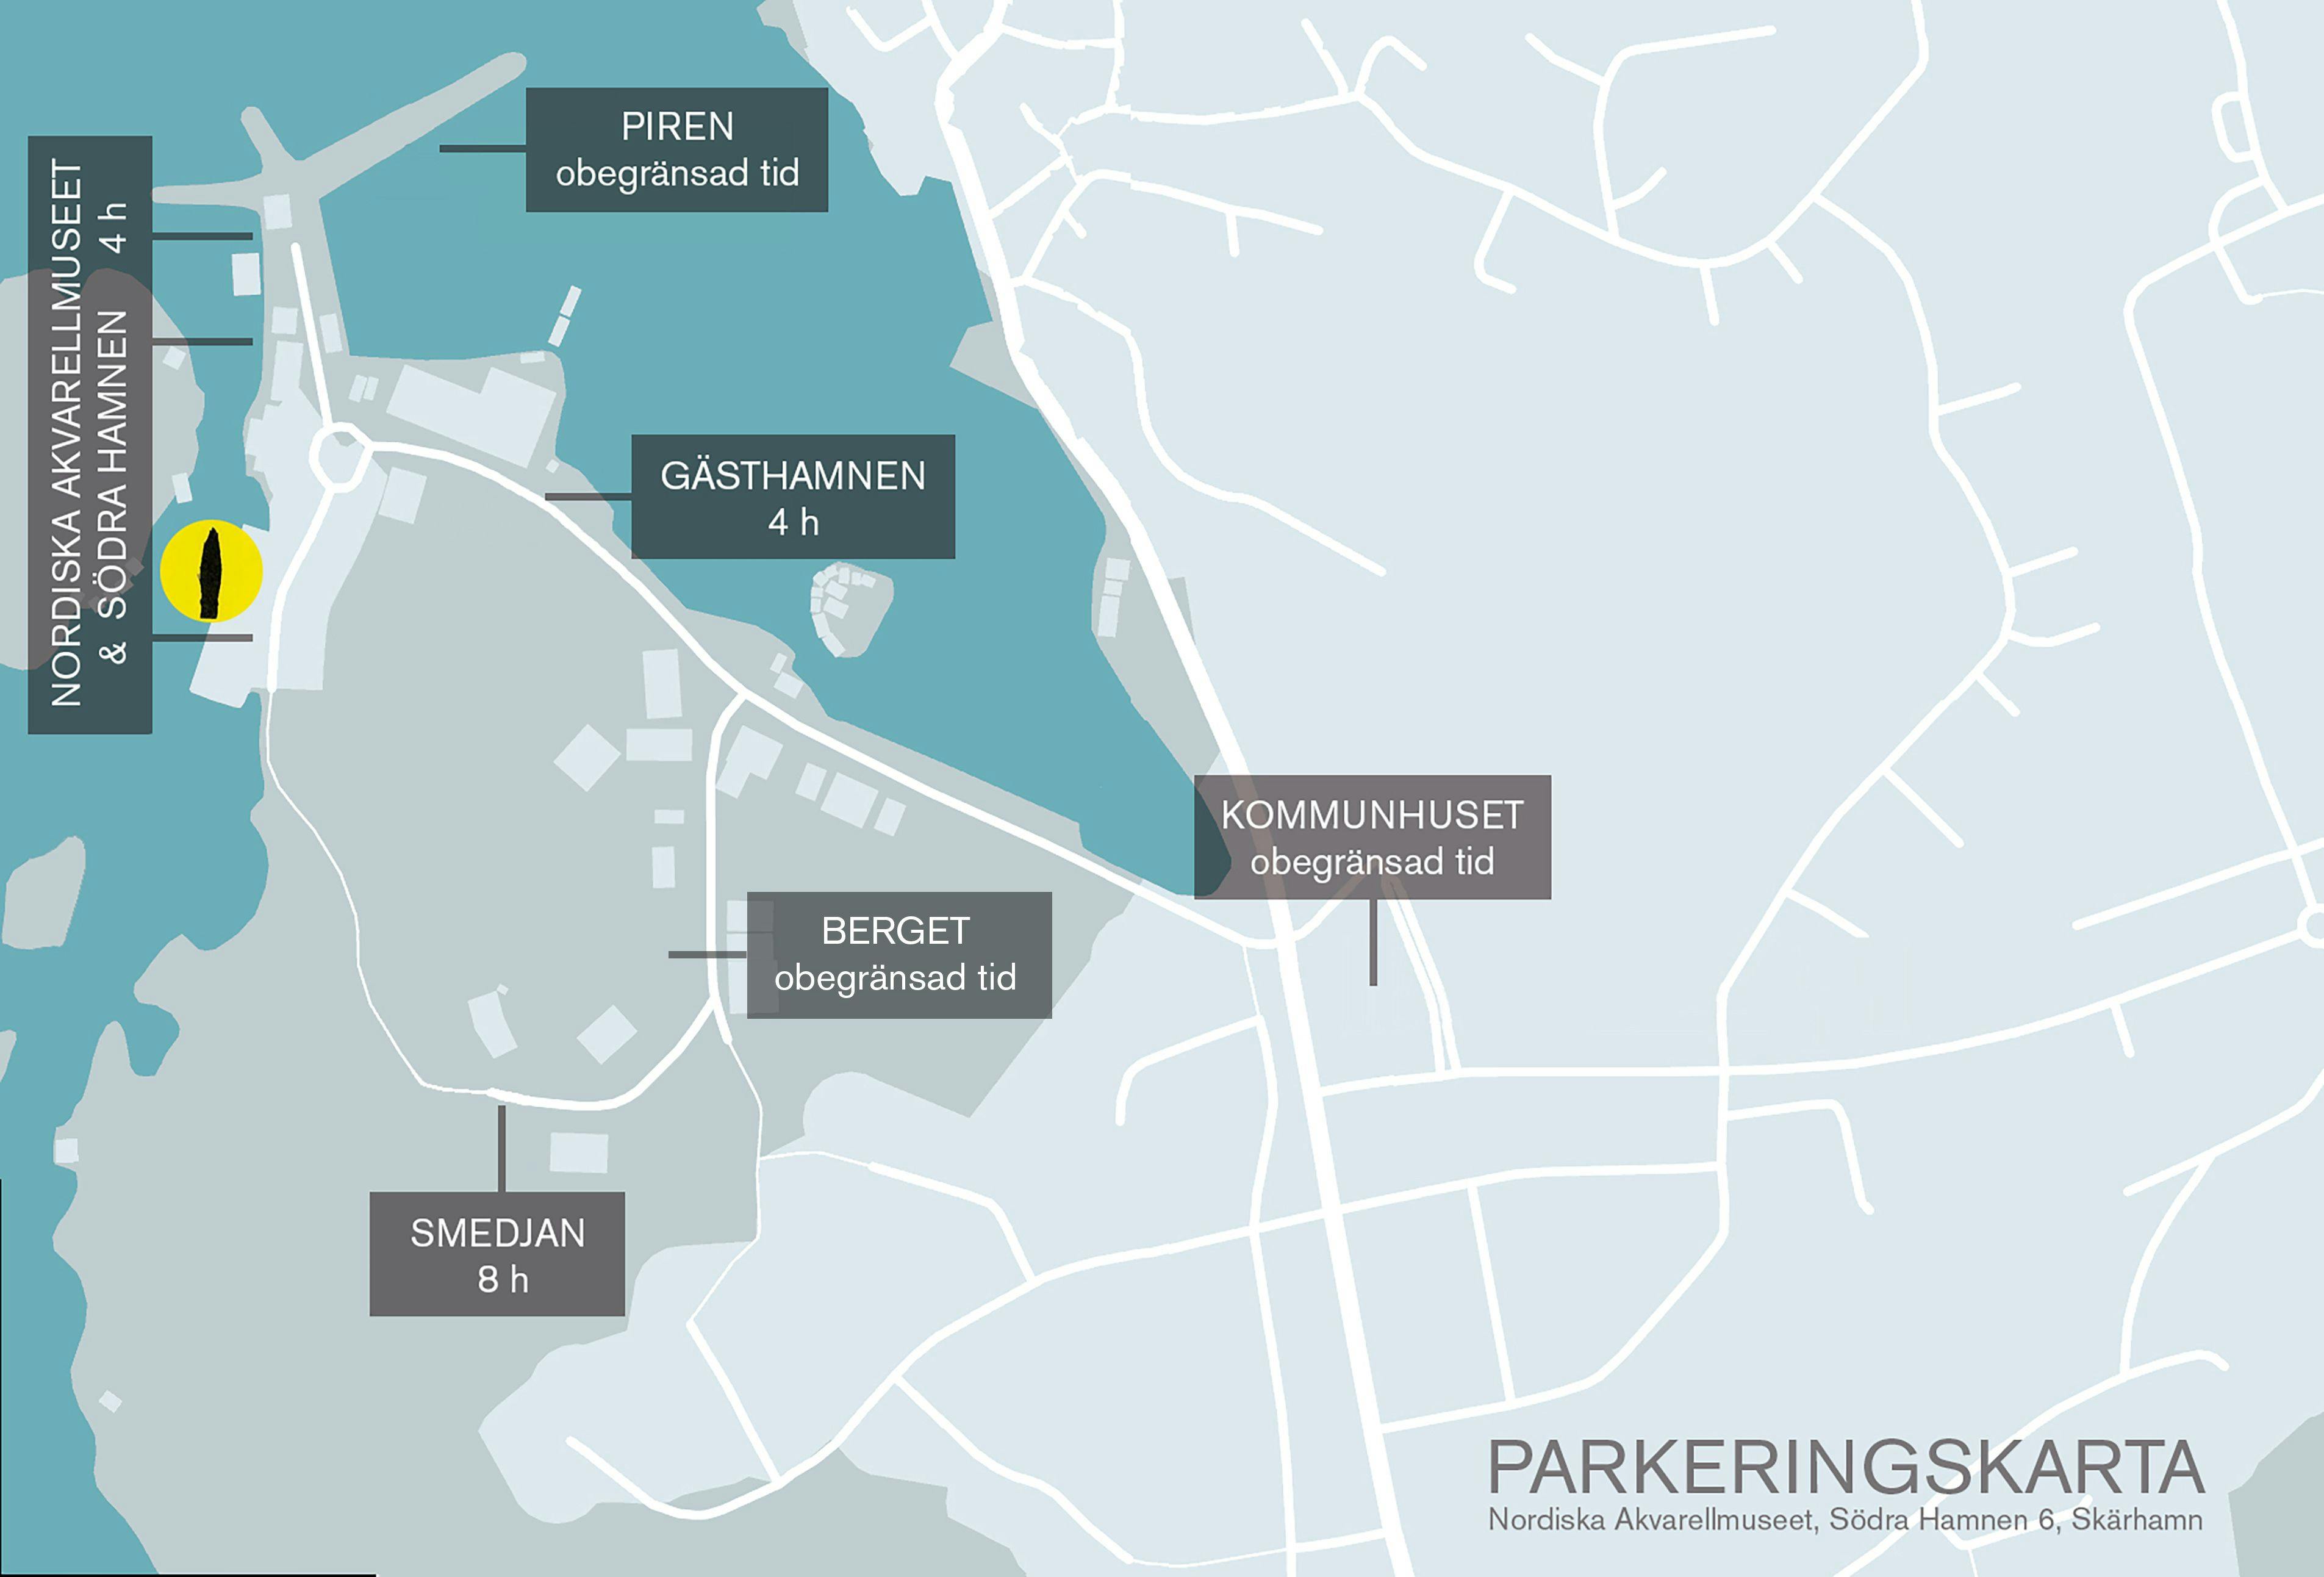 Map of Södra hamnen in Skärhamn and parking spaces